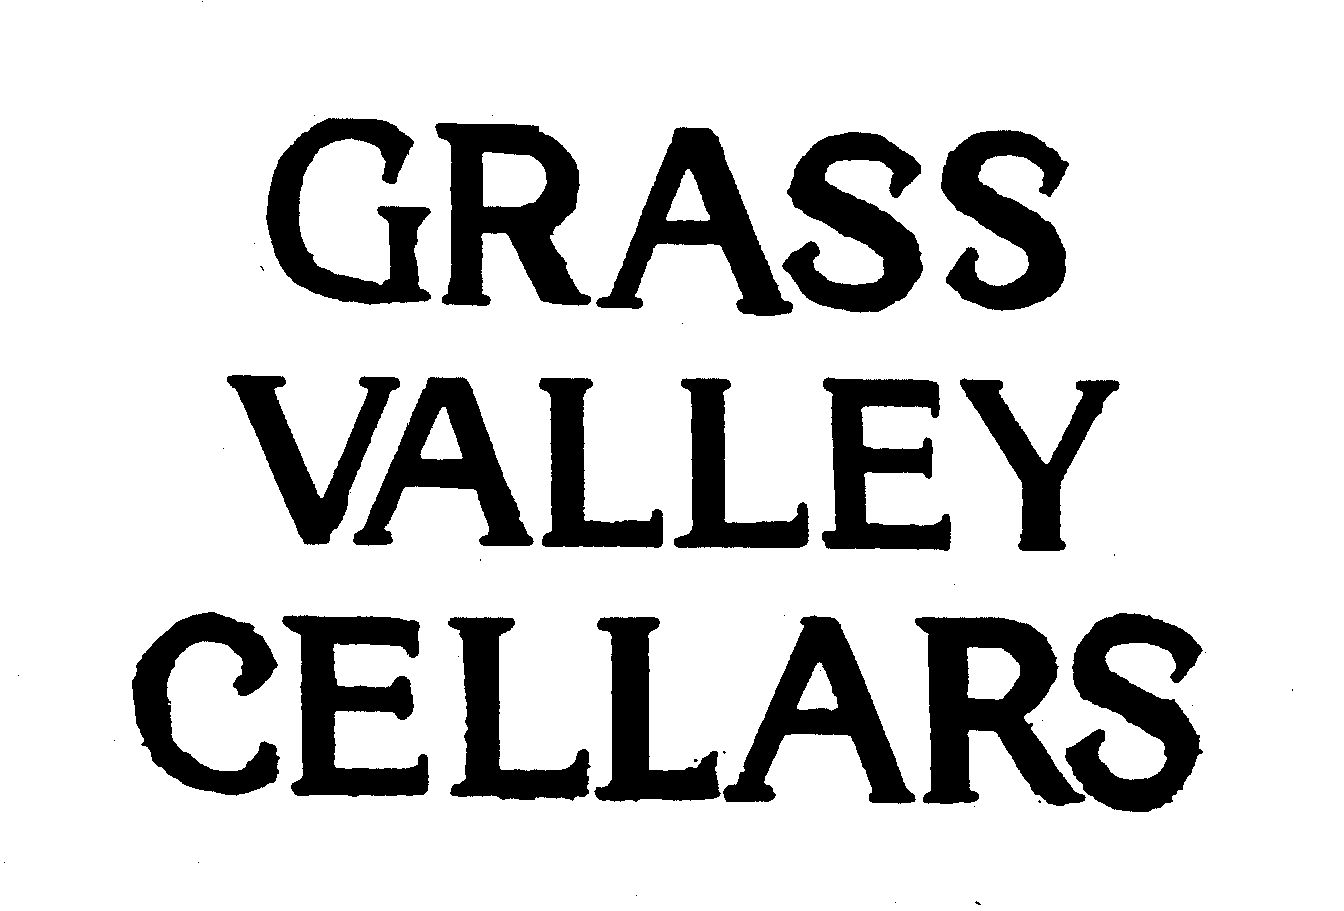  GRASS VALLEY CELLARS